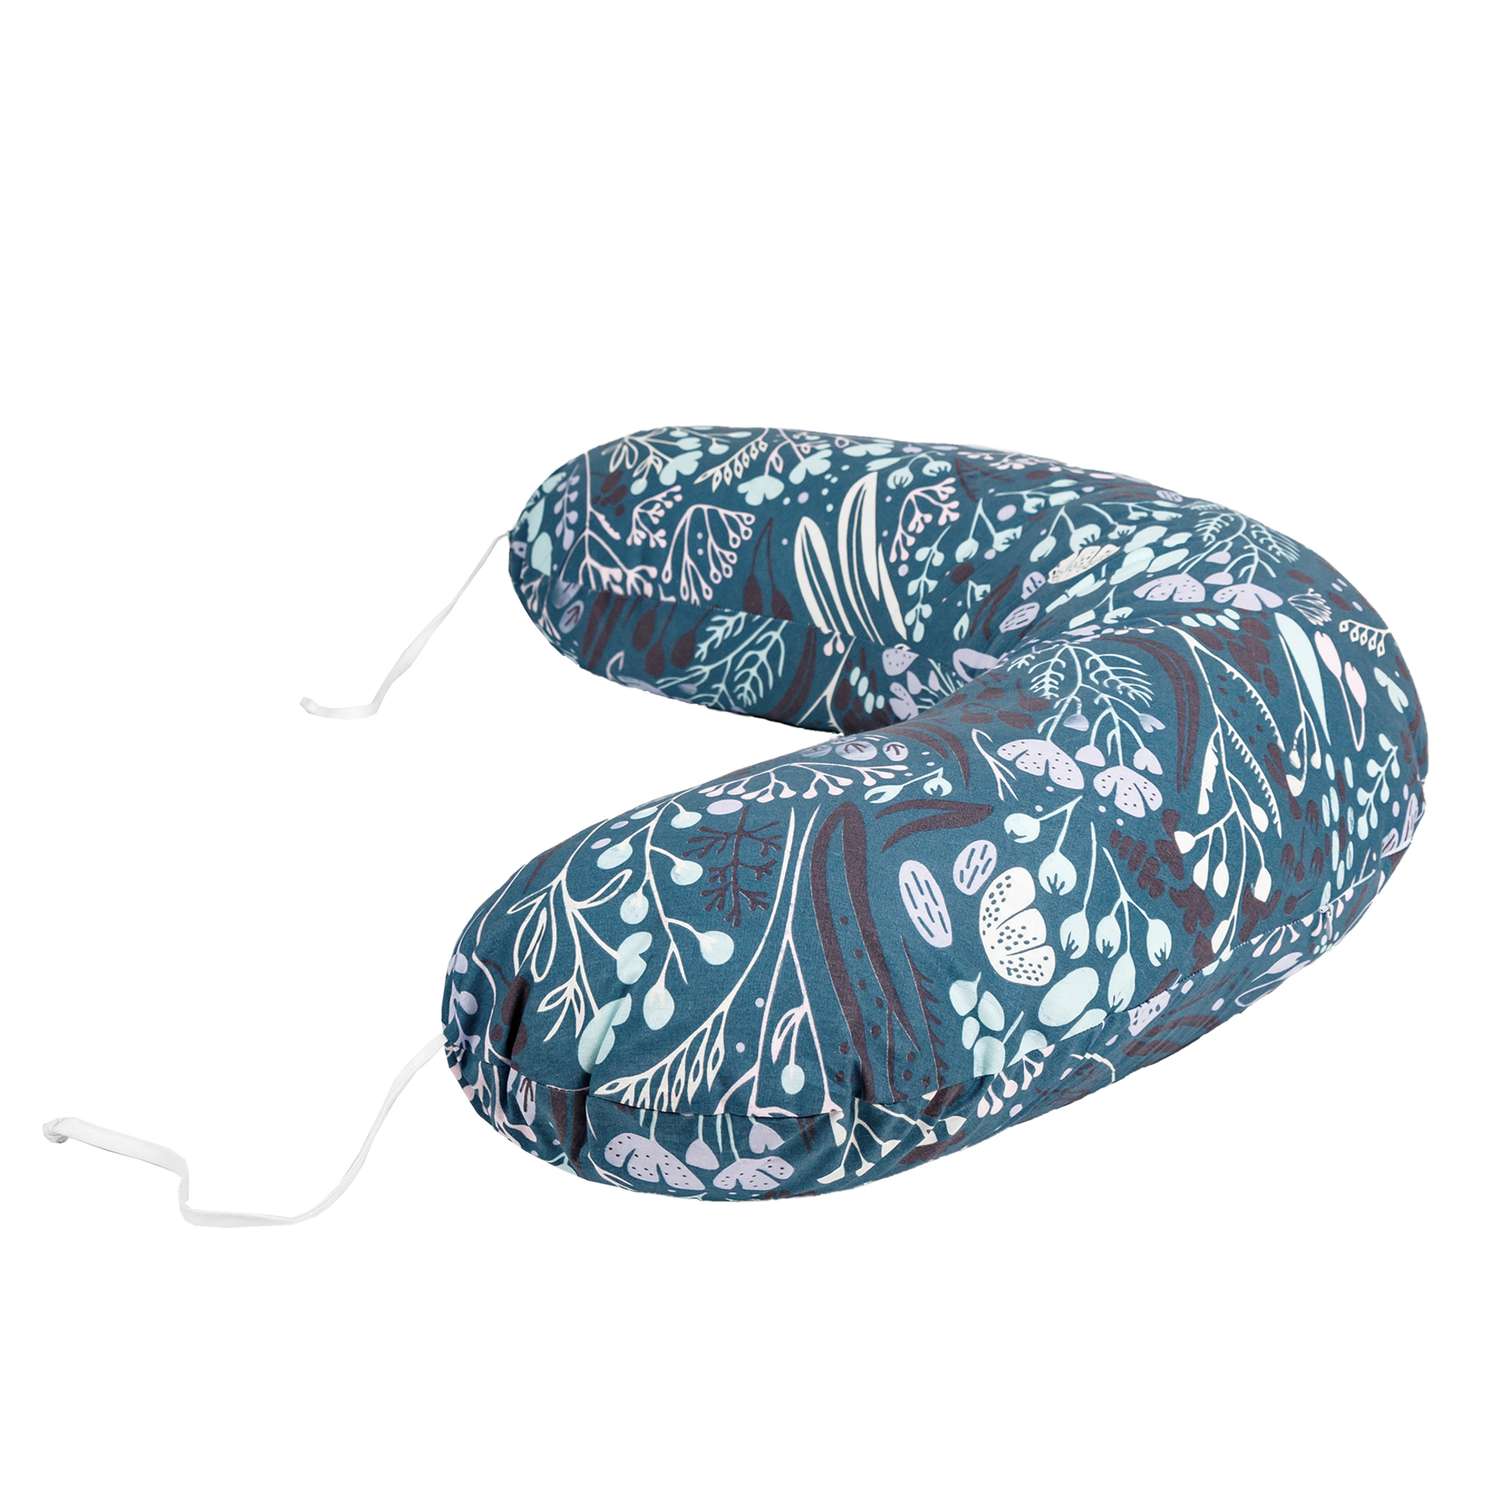 Подушка для беременных AmaroBaby 170х25 см Flower dreams фиолетовая - фото 4